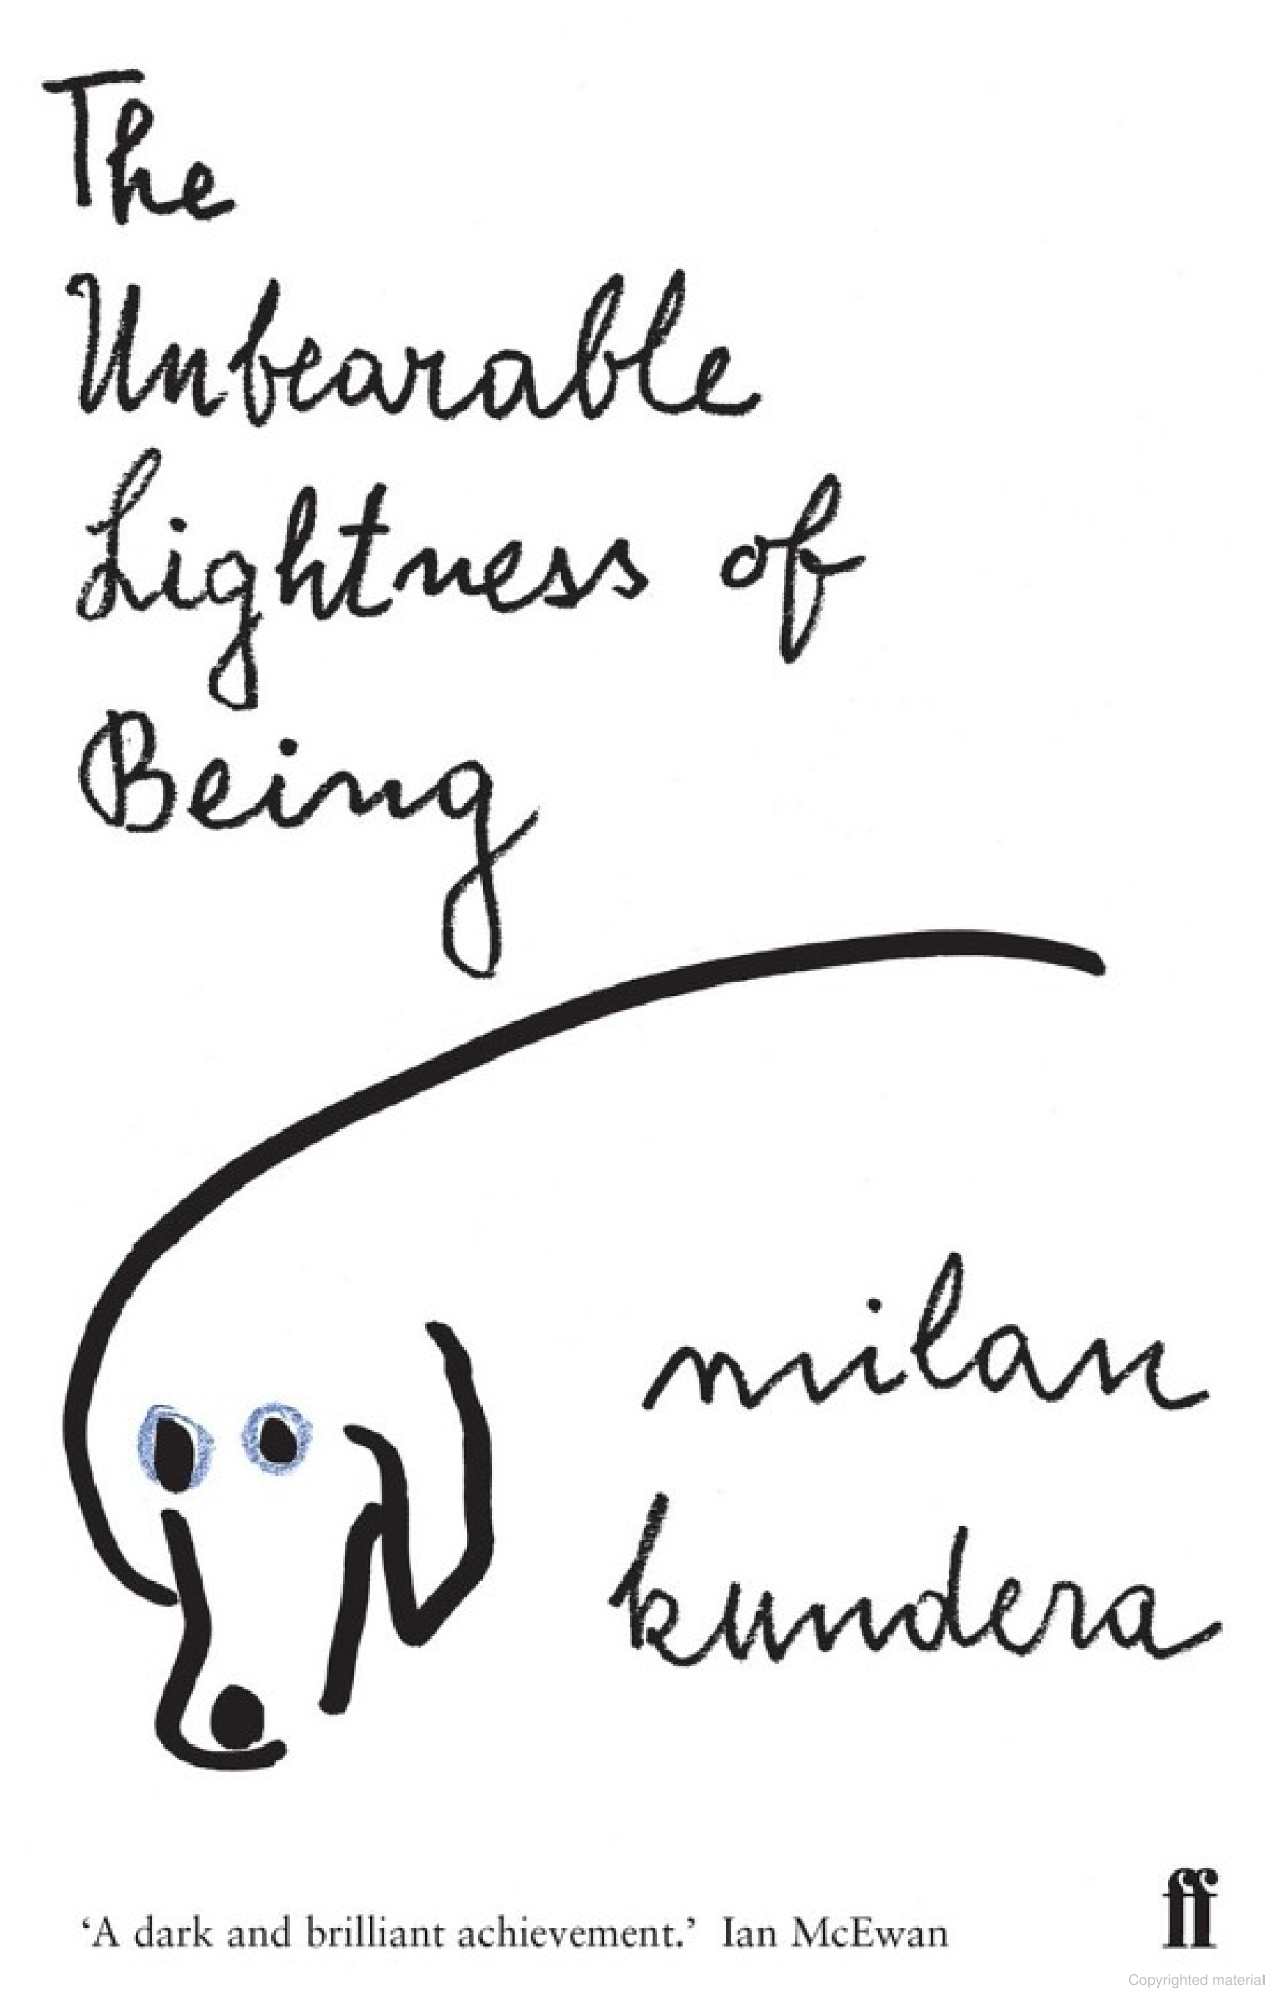 The Unbearable Lightness of Being
Novel by Milan Kundera